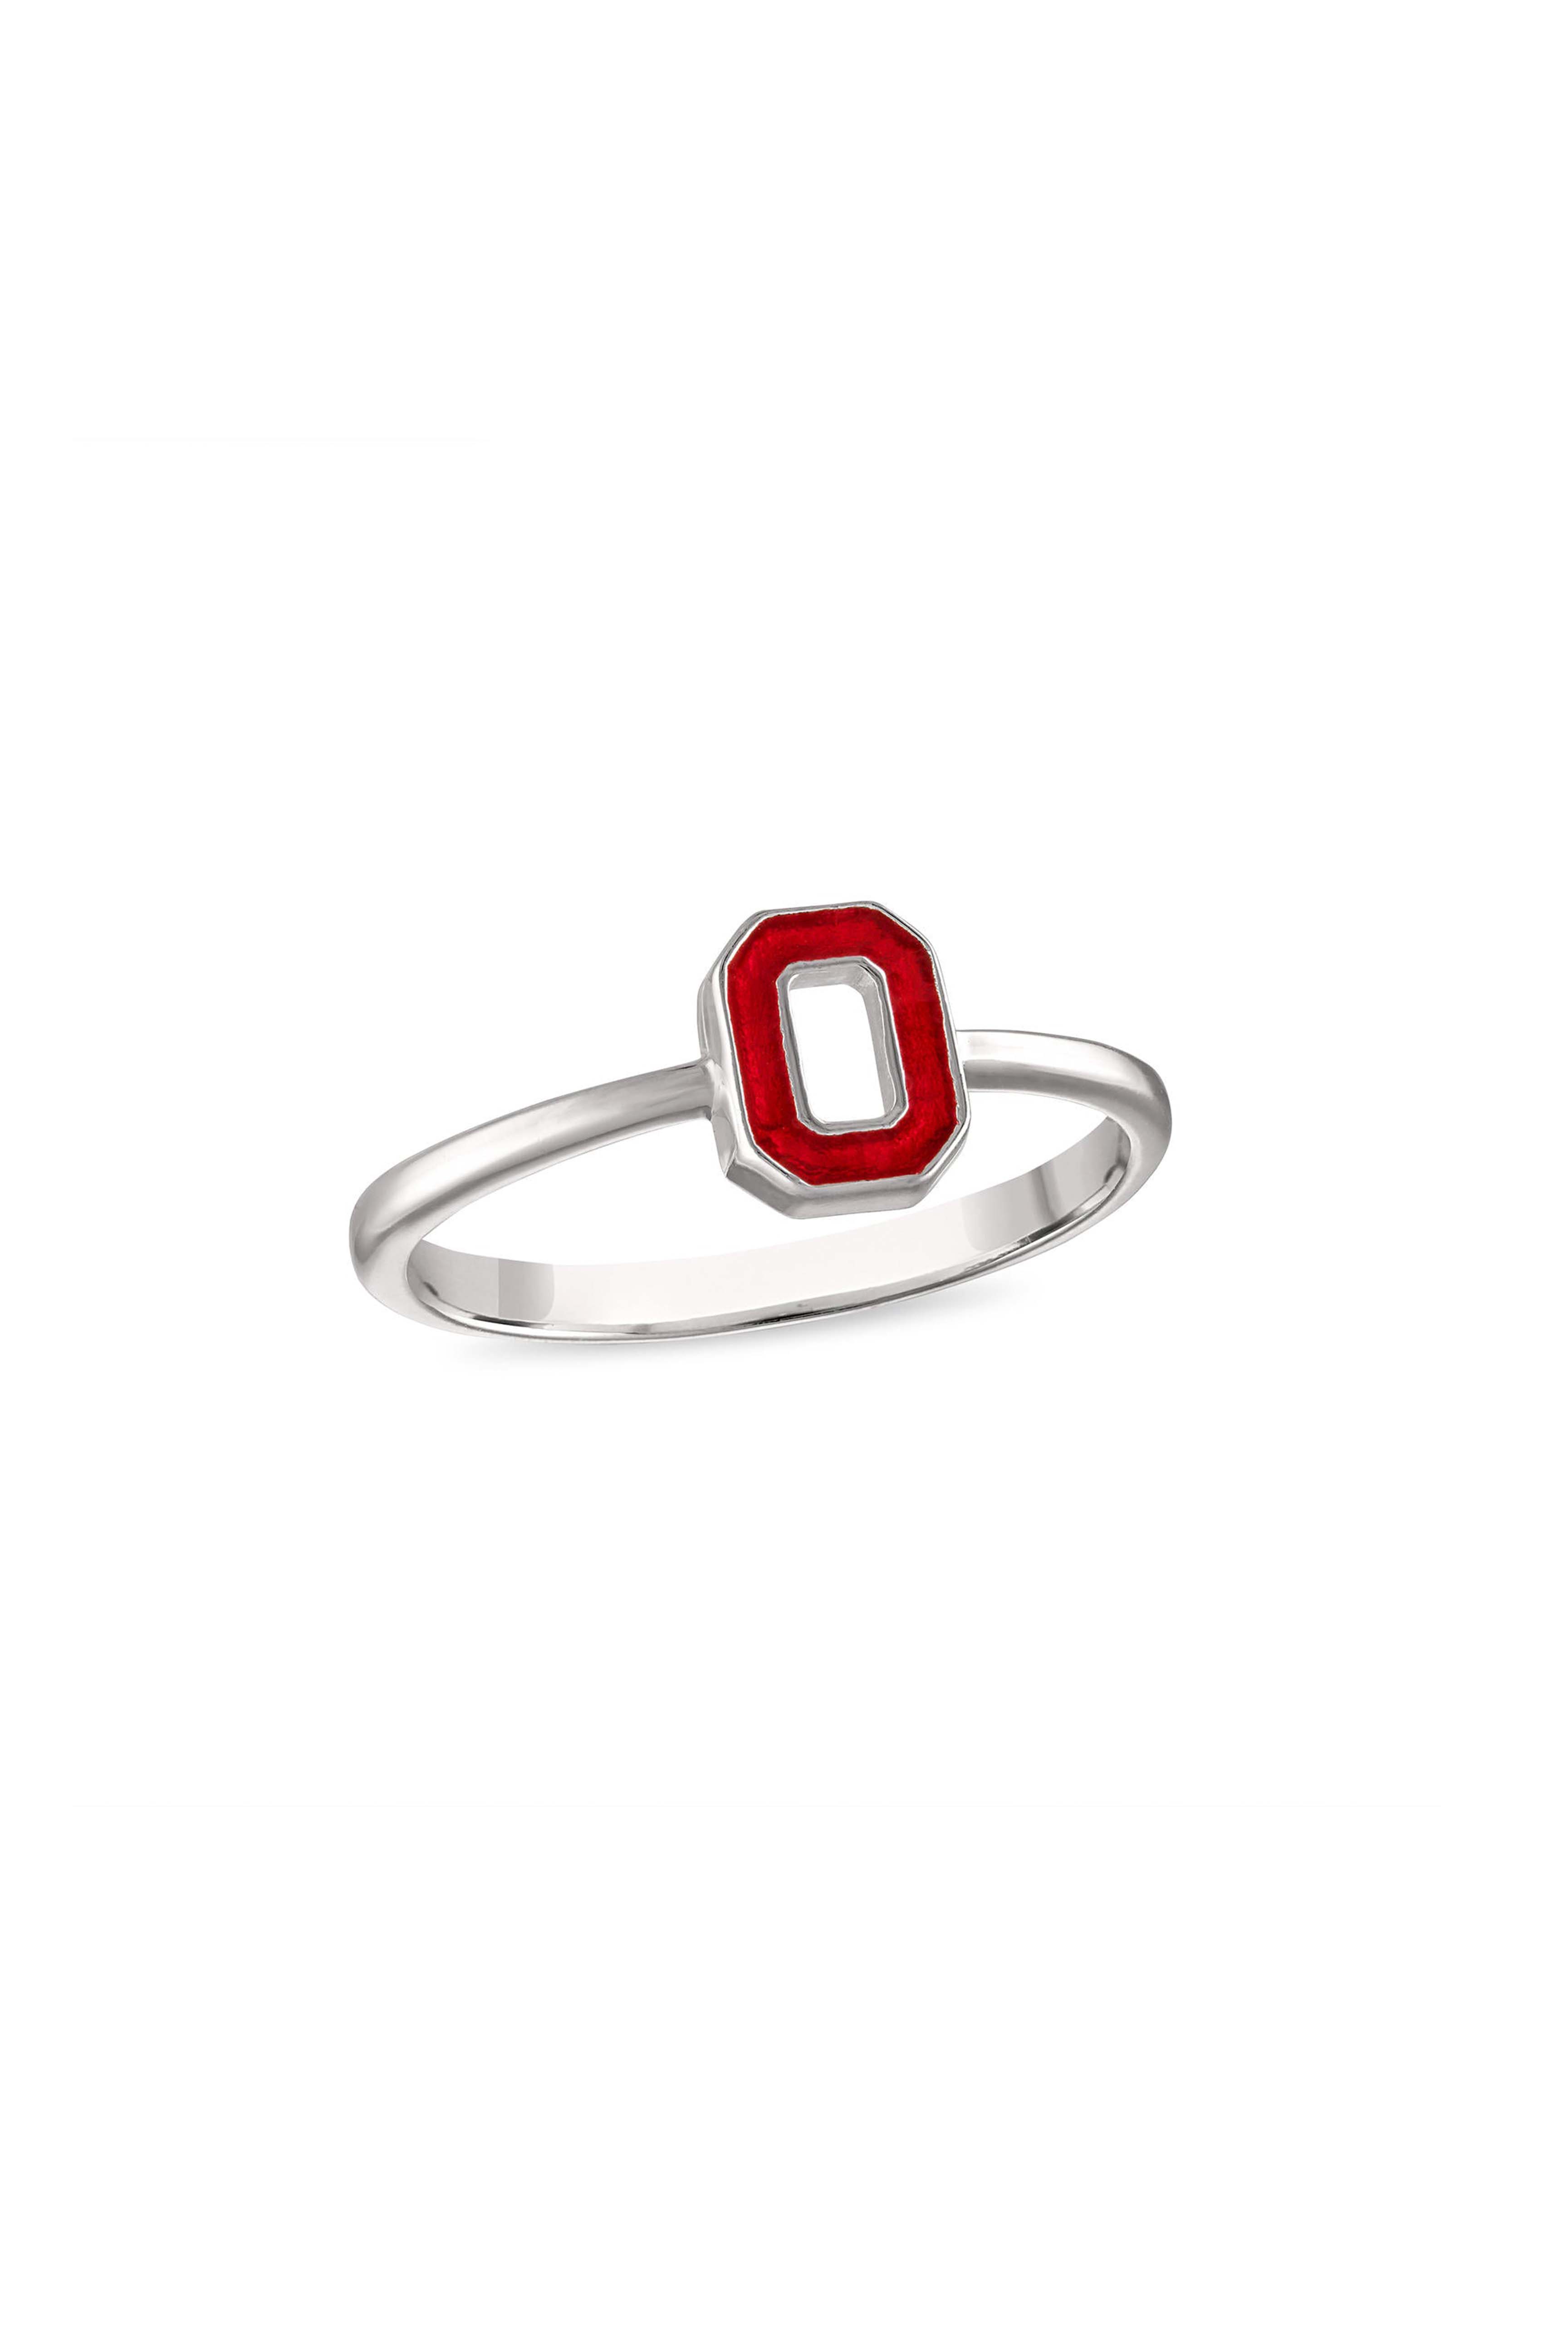 Ohio State Ring Jewelry - OSU Gifts – Stone Armory